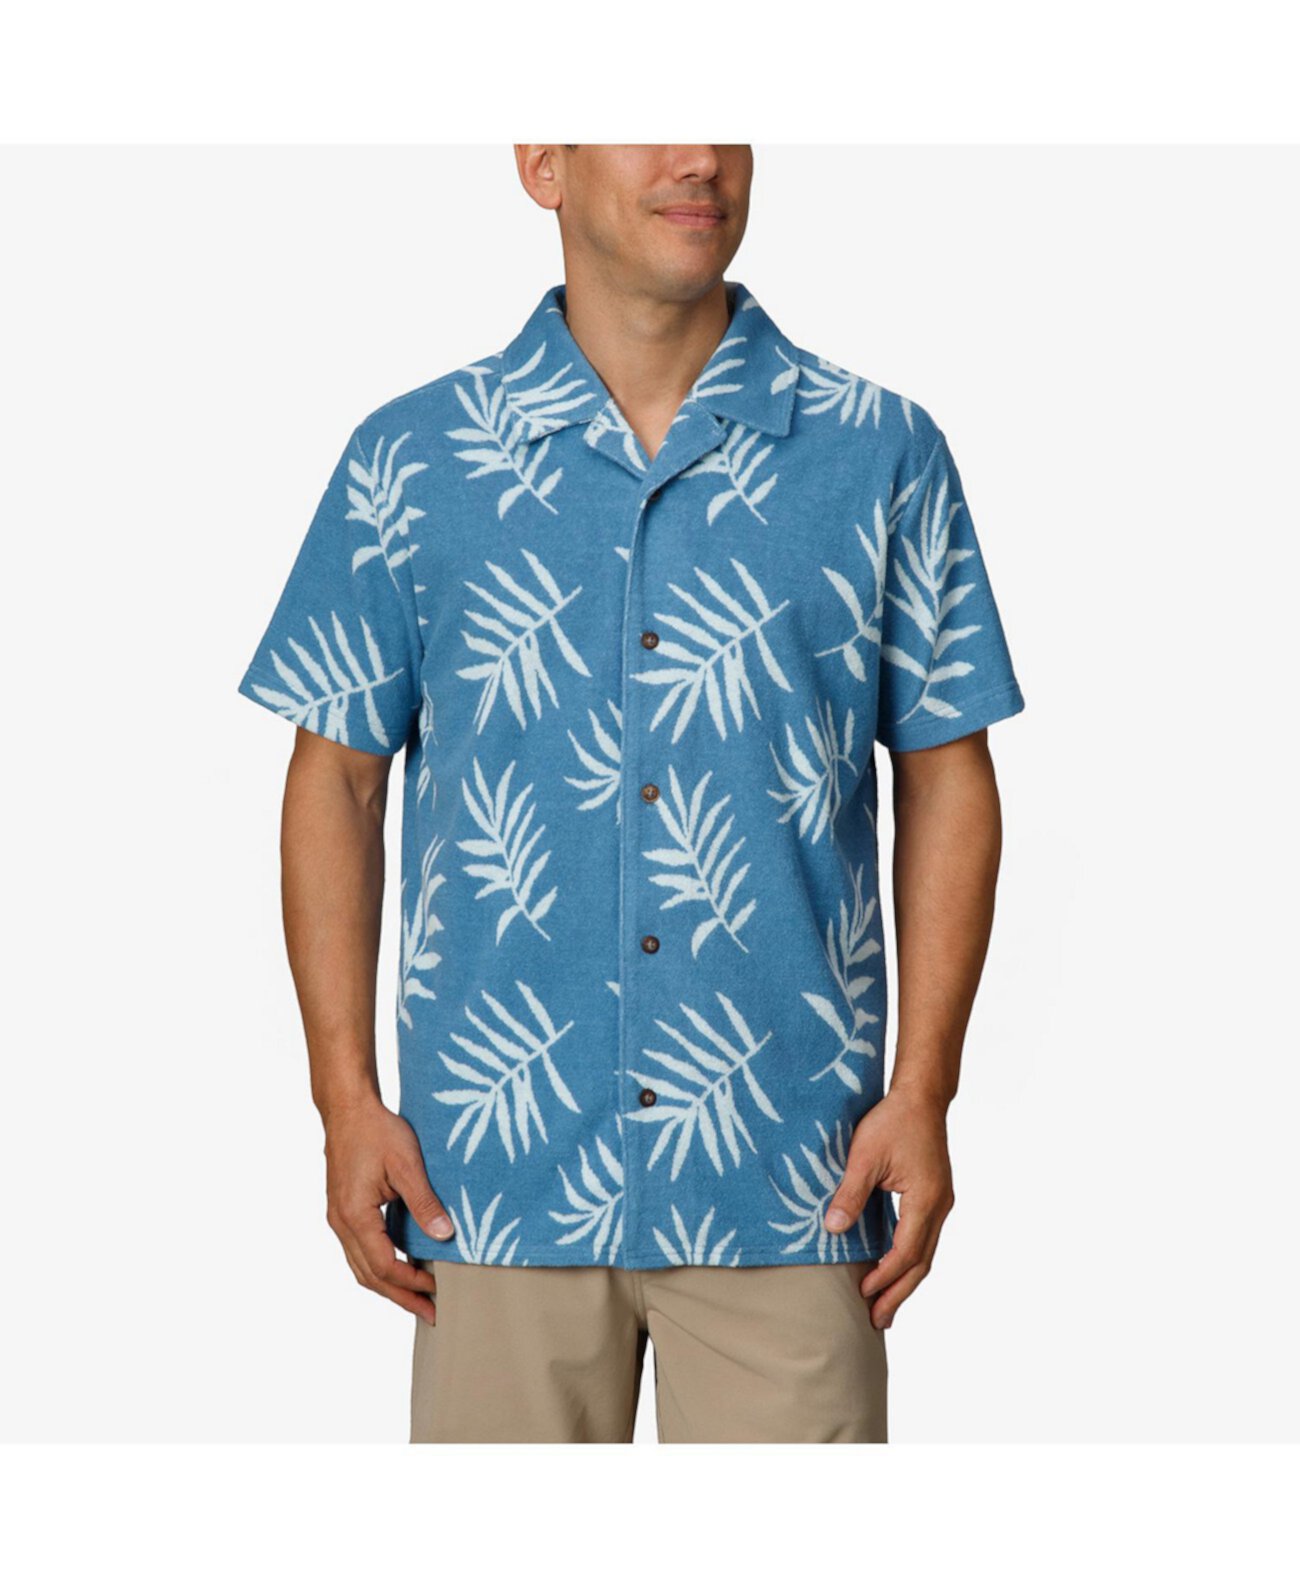 Мужская трикотажная рубашка на пуговицах с короткими рукавами Kenji Reef